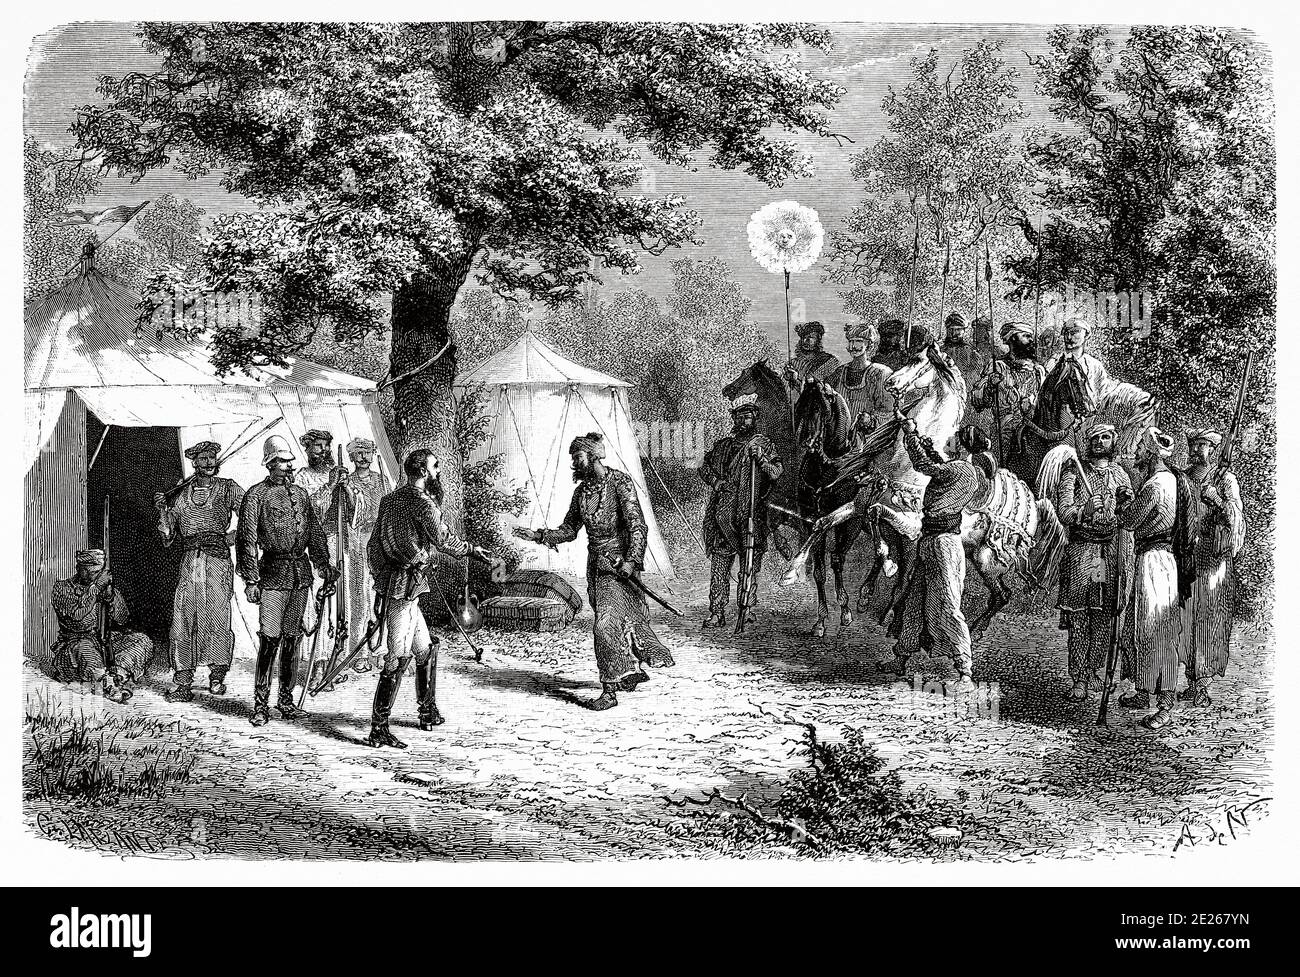 Rajah of Bunera, Rajasthan, India. Old engraving illustration from El Mundo en la Mano 1878 Stock Photo